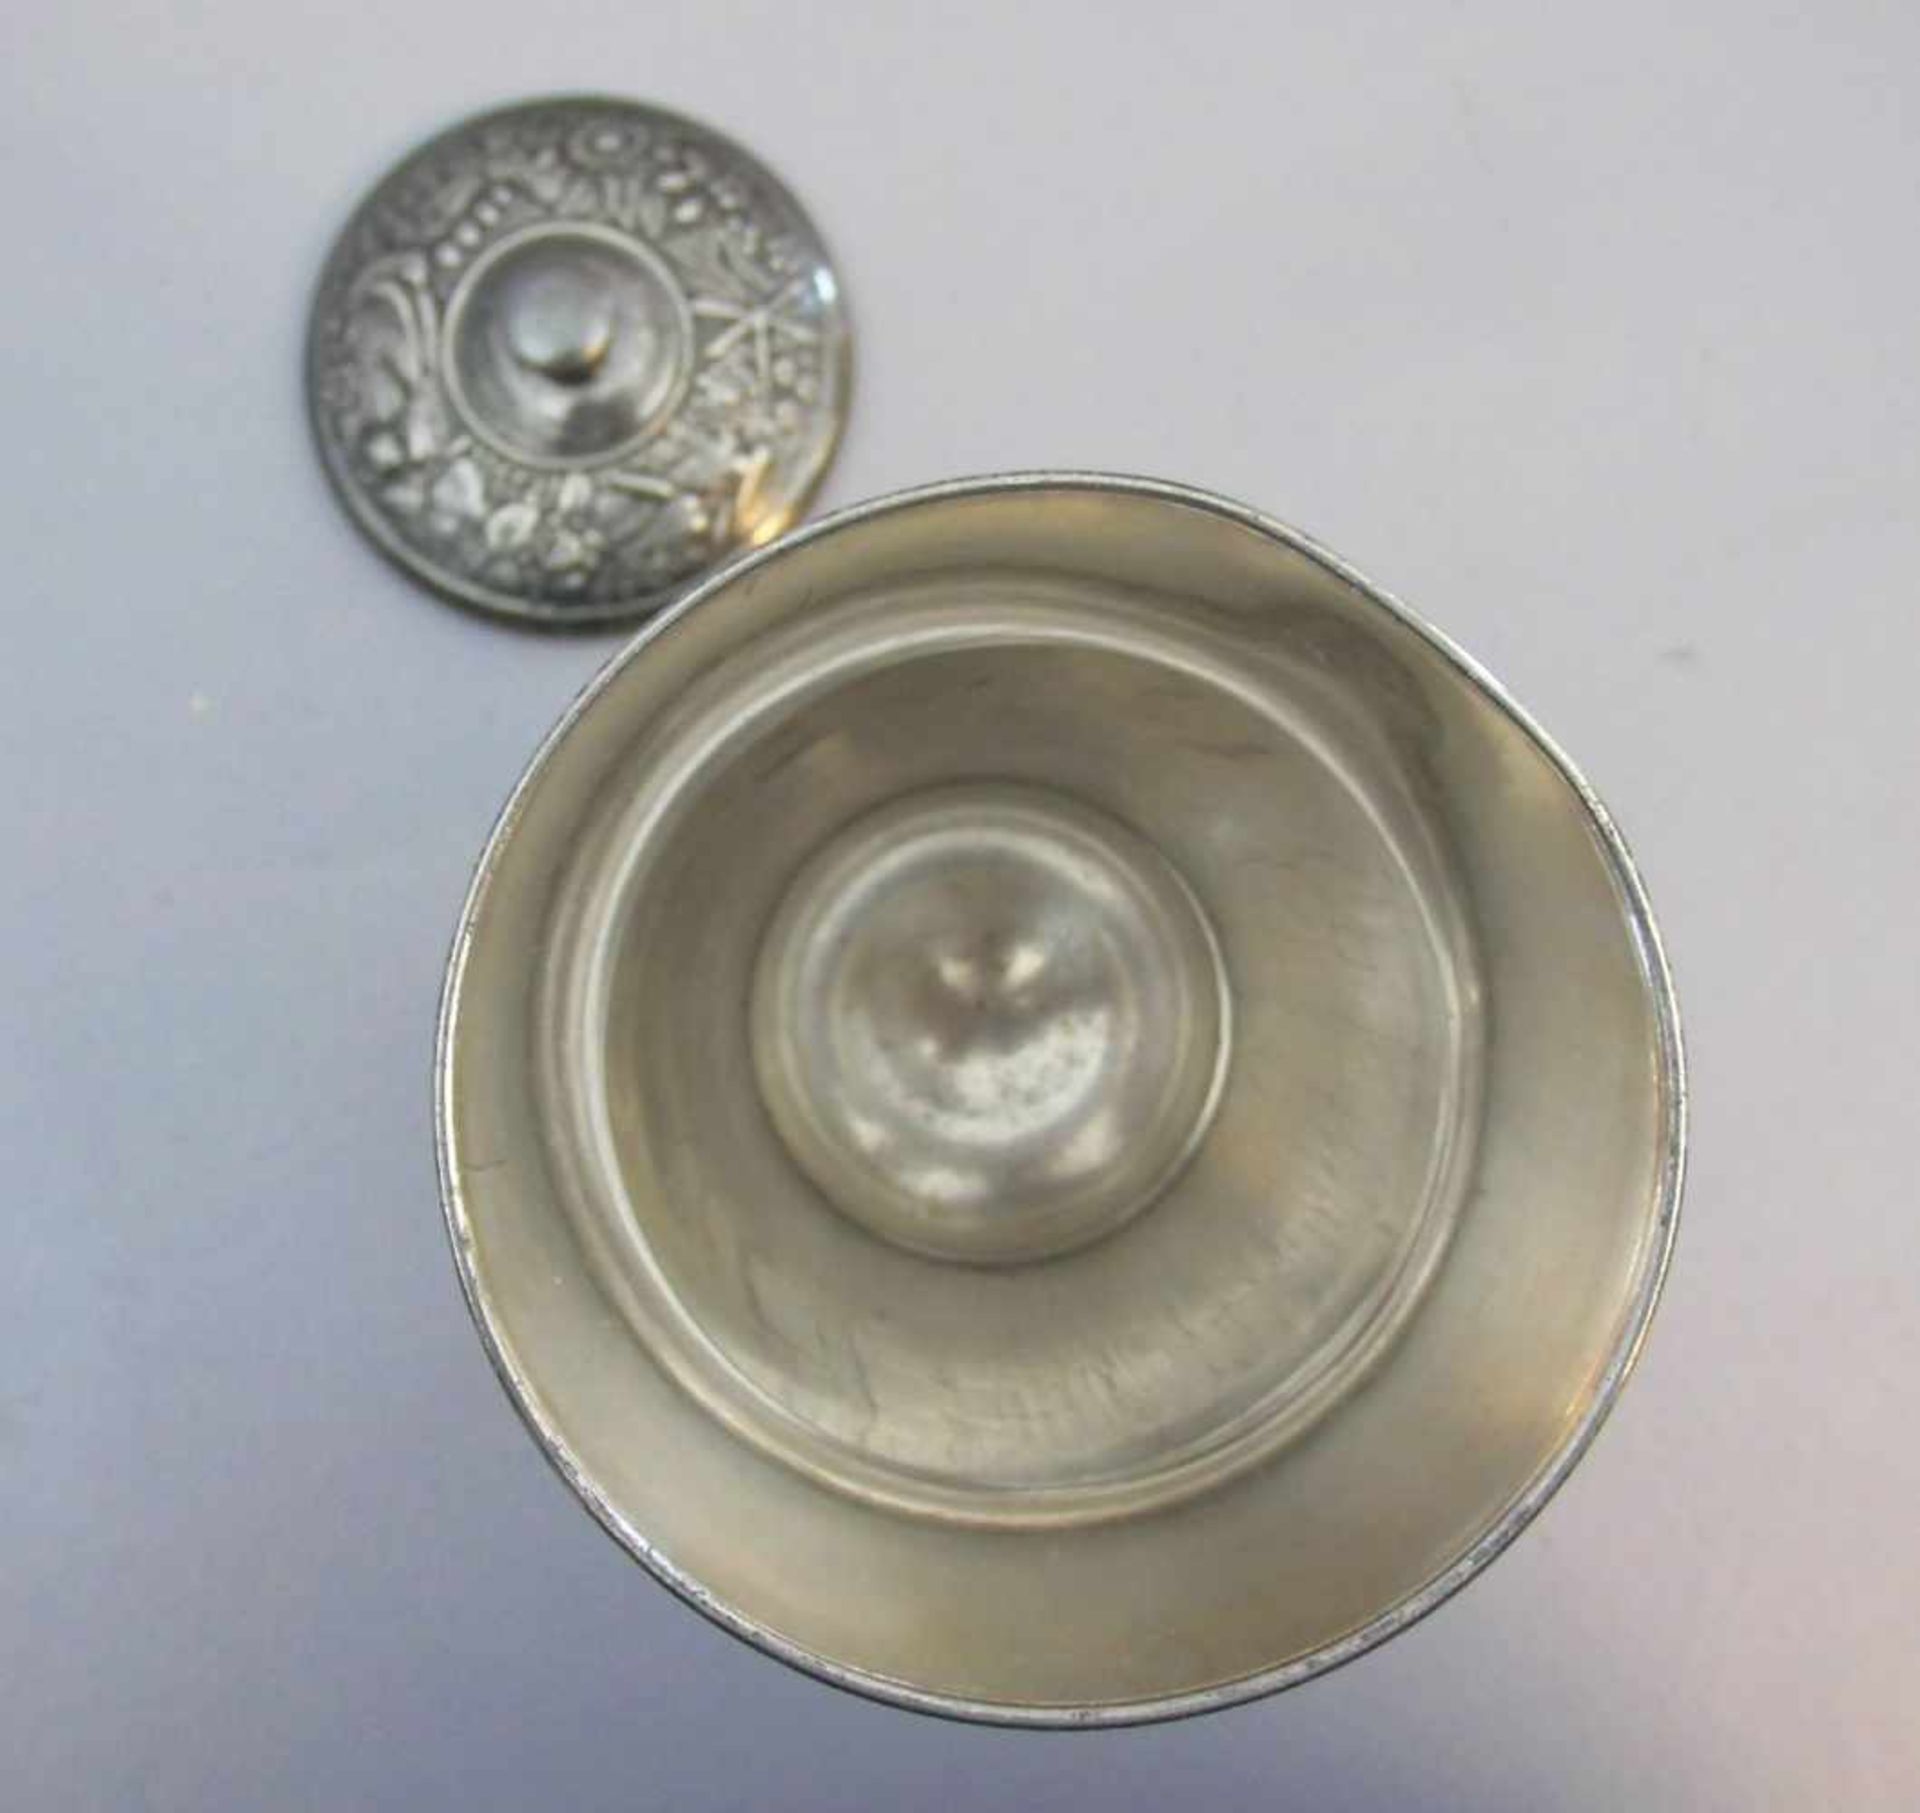 JUGENDSTIL DECKEL - POKAL / art nouveau goblet, silberfarbenes Metall, unter dem Stand u. a. - Bild 2 aus 4